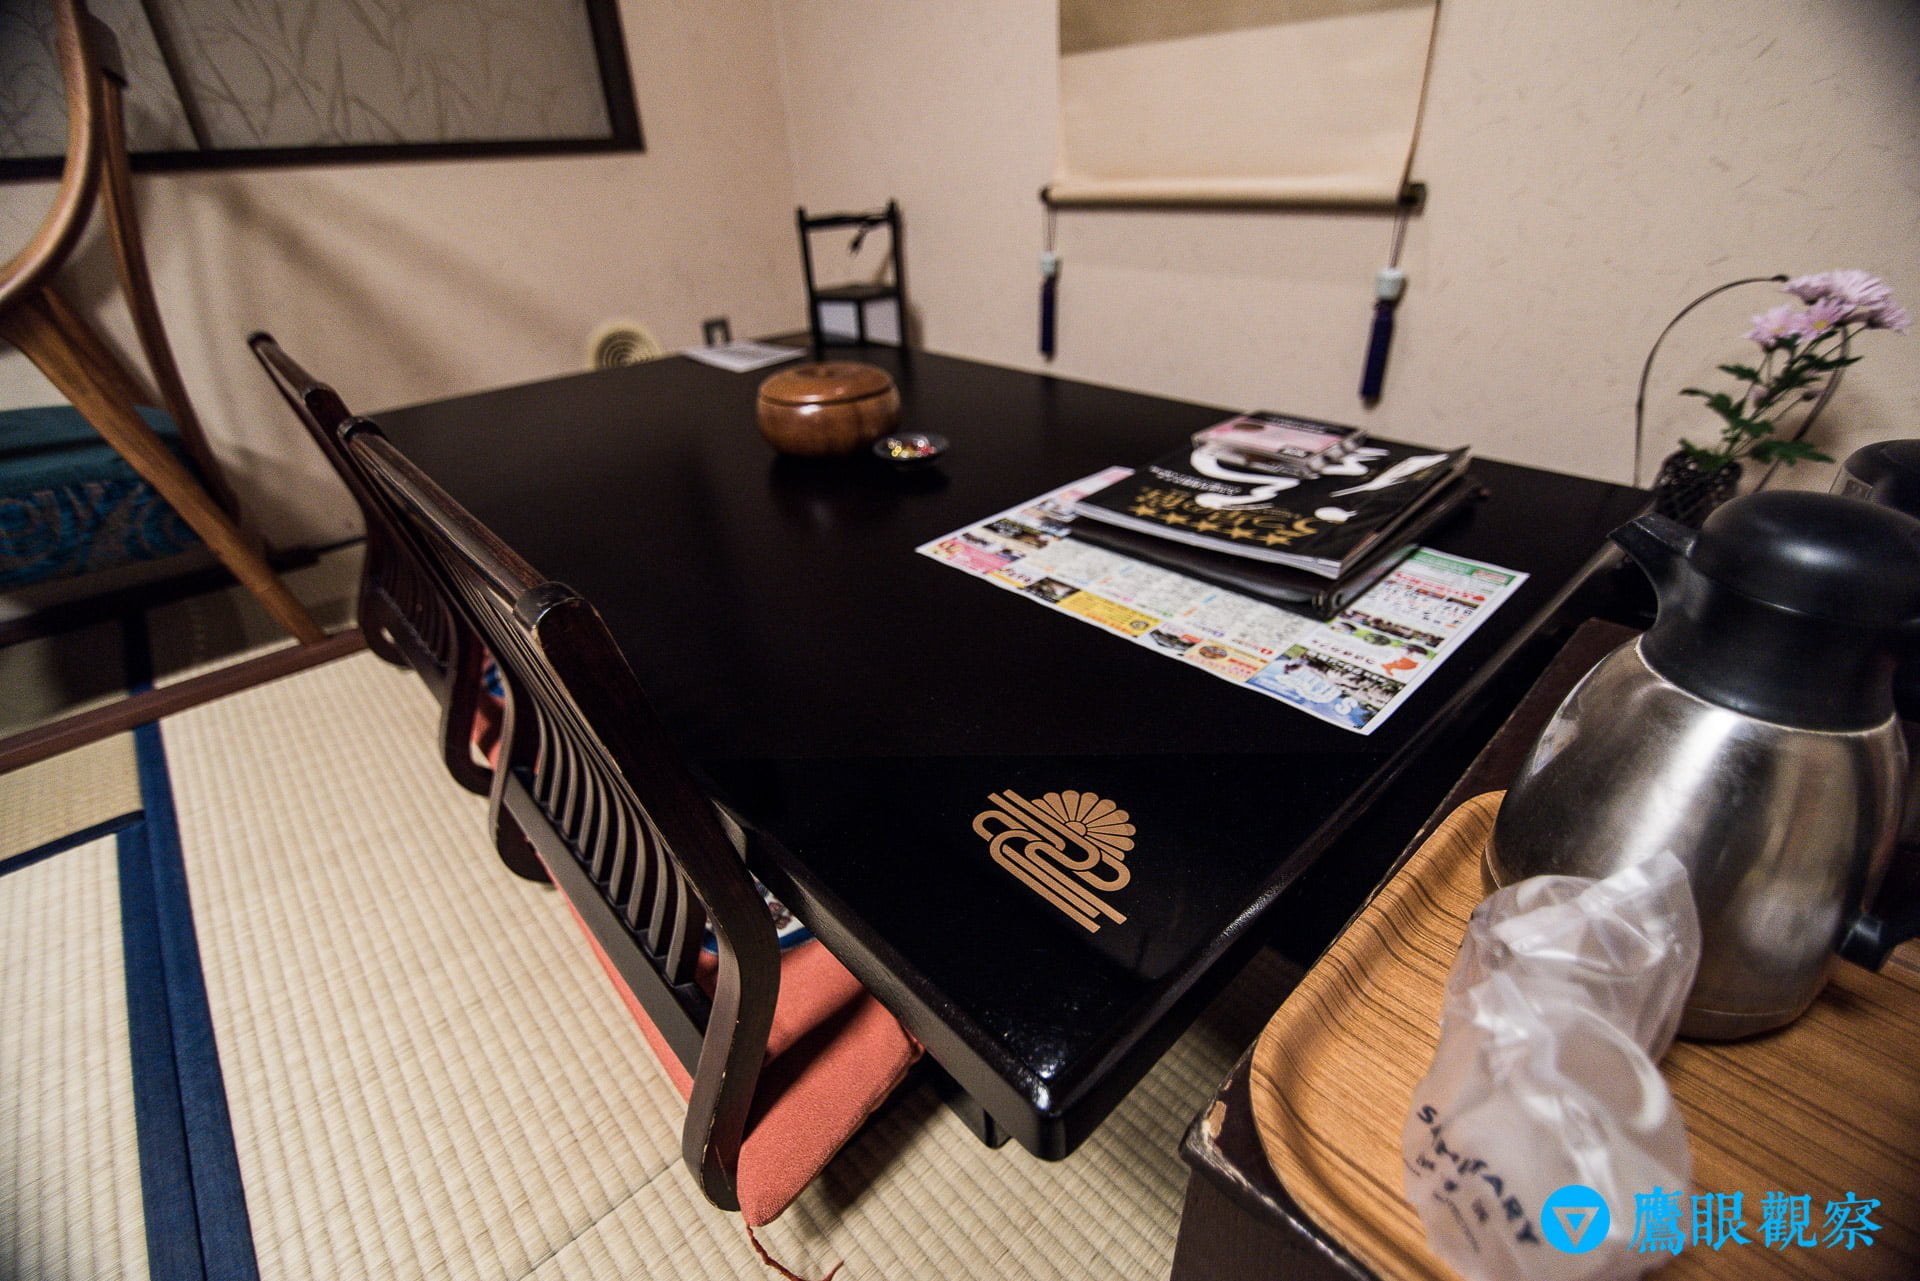 群馬縣伊香保溫泉「岸權旅館」日本旅館住宿推薦 travel Japan gunma kishigon ryokan hotel in izumo spa hot spring 38